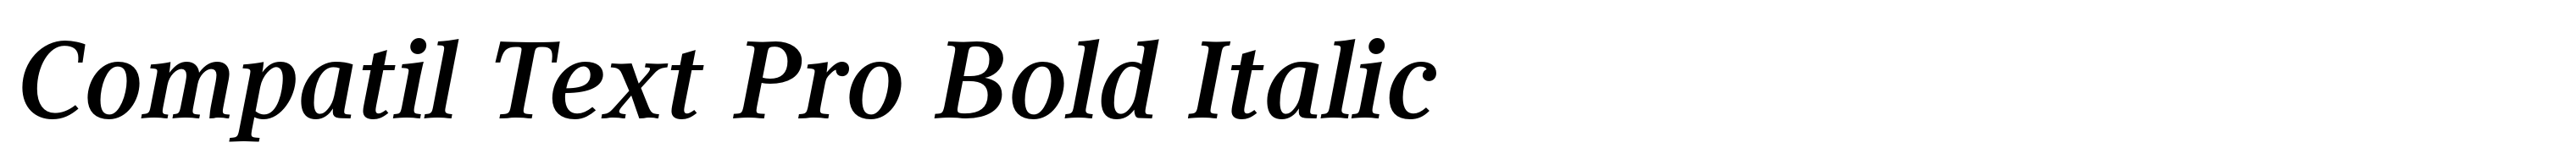 Compatil Text Pro Bold Italic